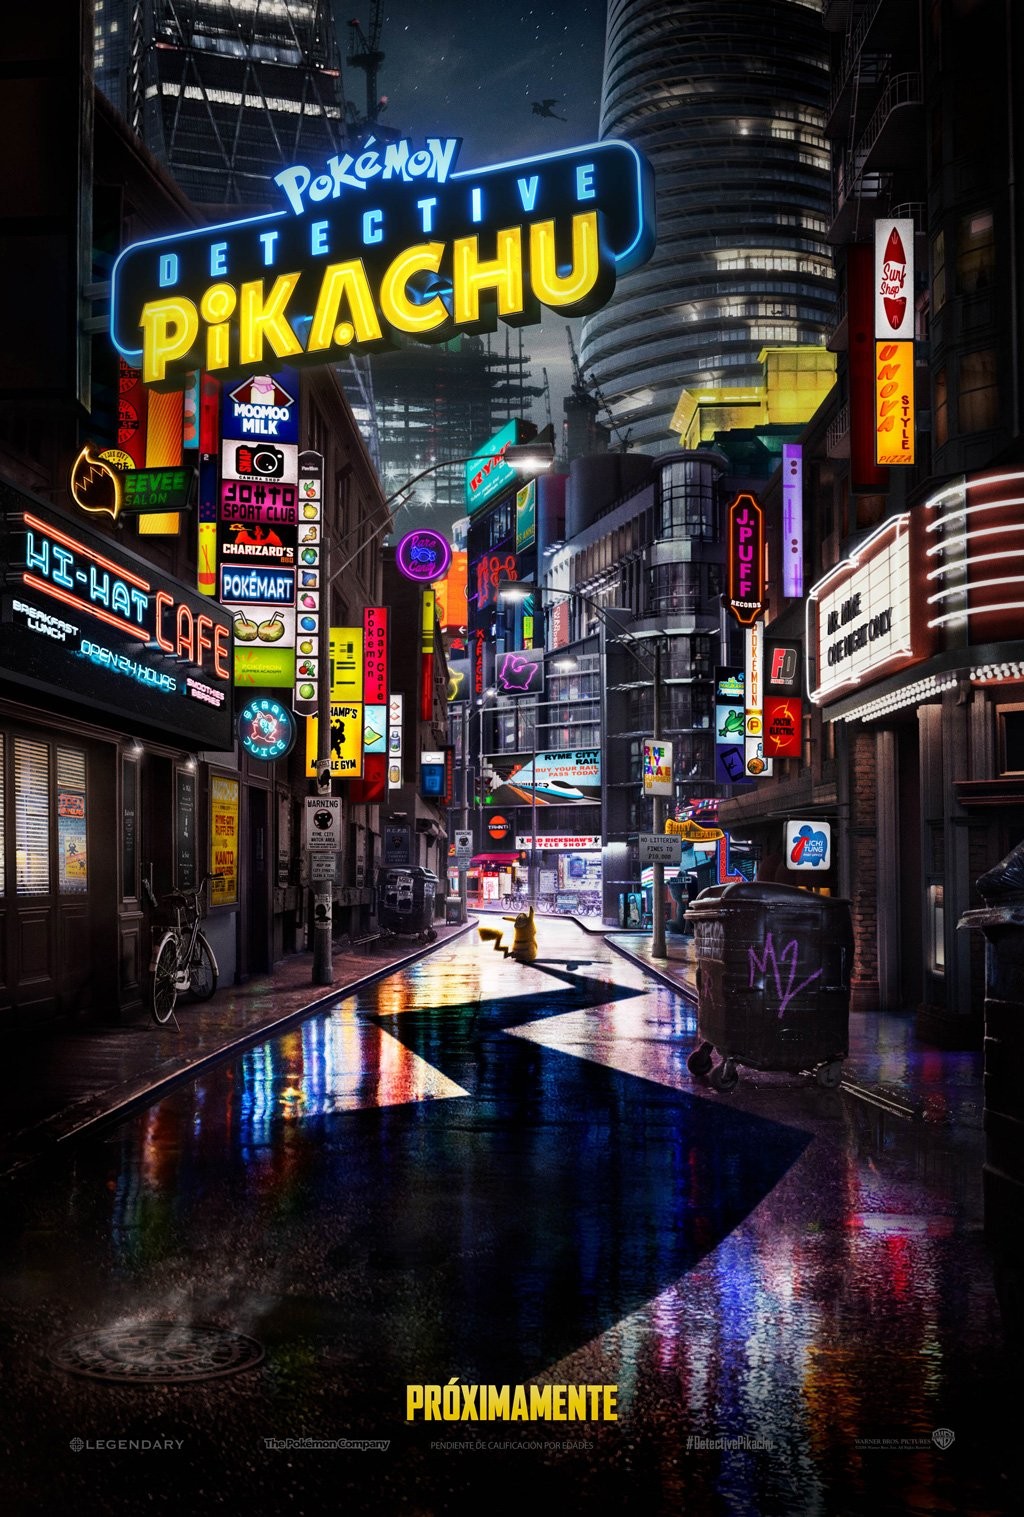 “Detective Pikachu”, trailer de la primera película de pokémon